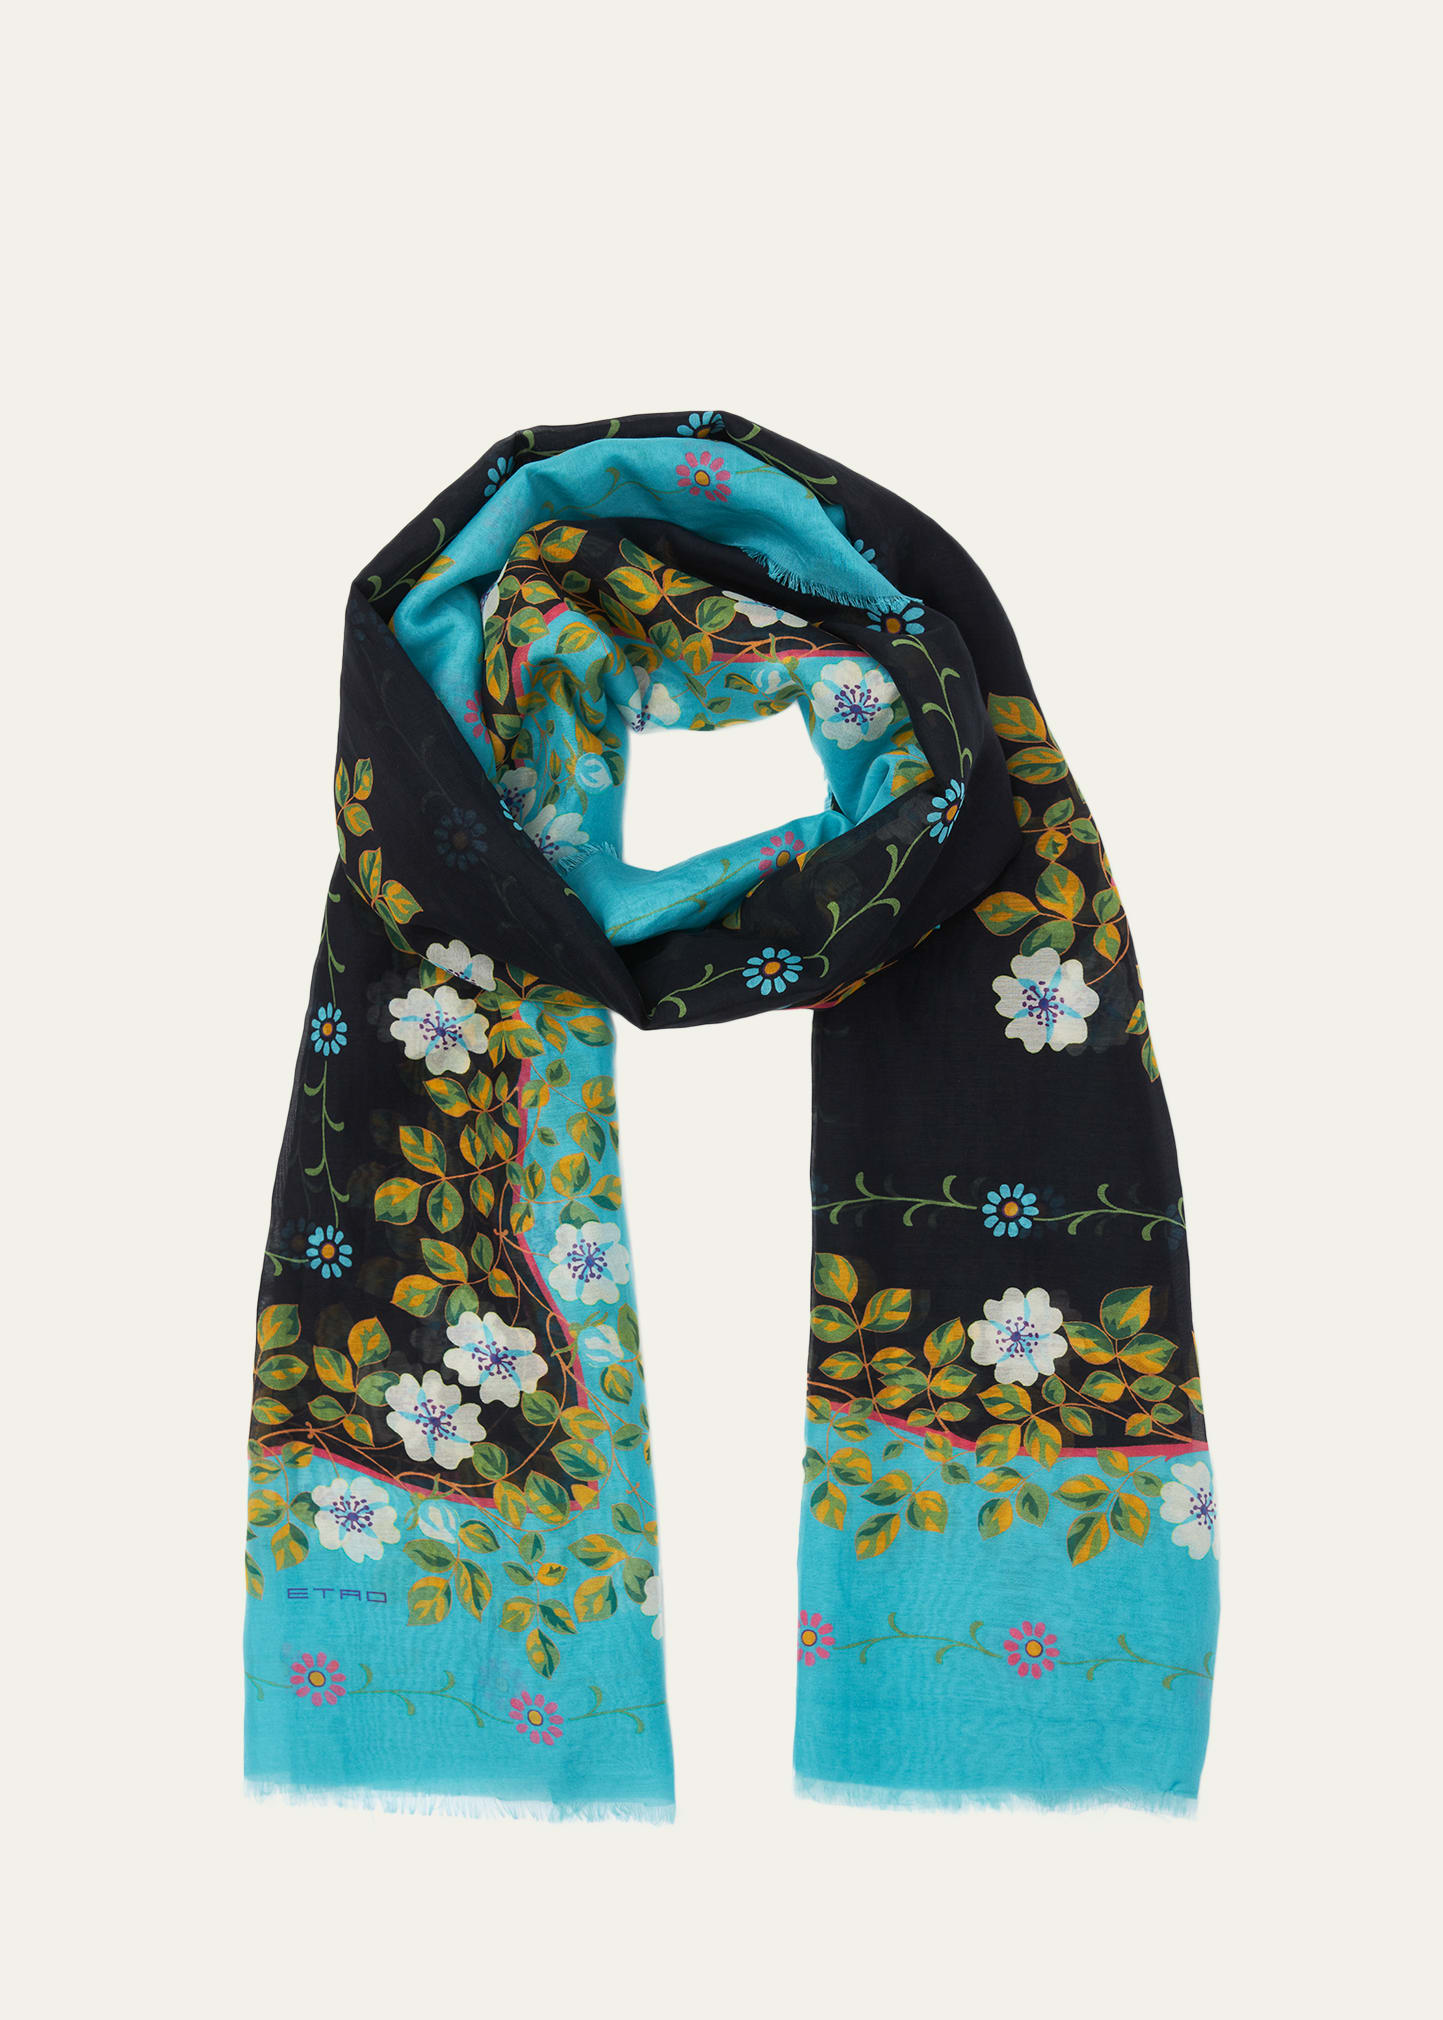 Etro Floral Cotton & Silk Scarf In X0810 Stampa Fdo